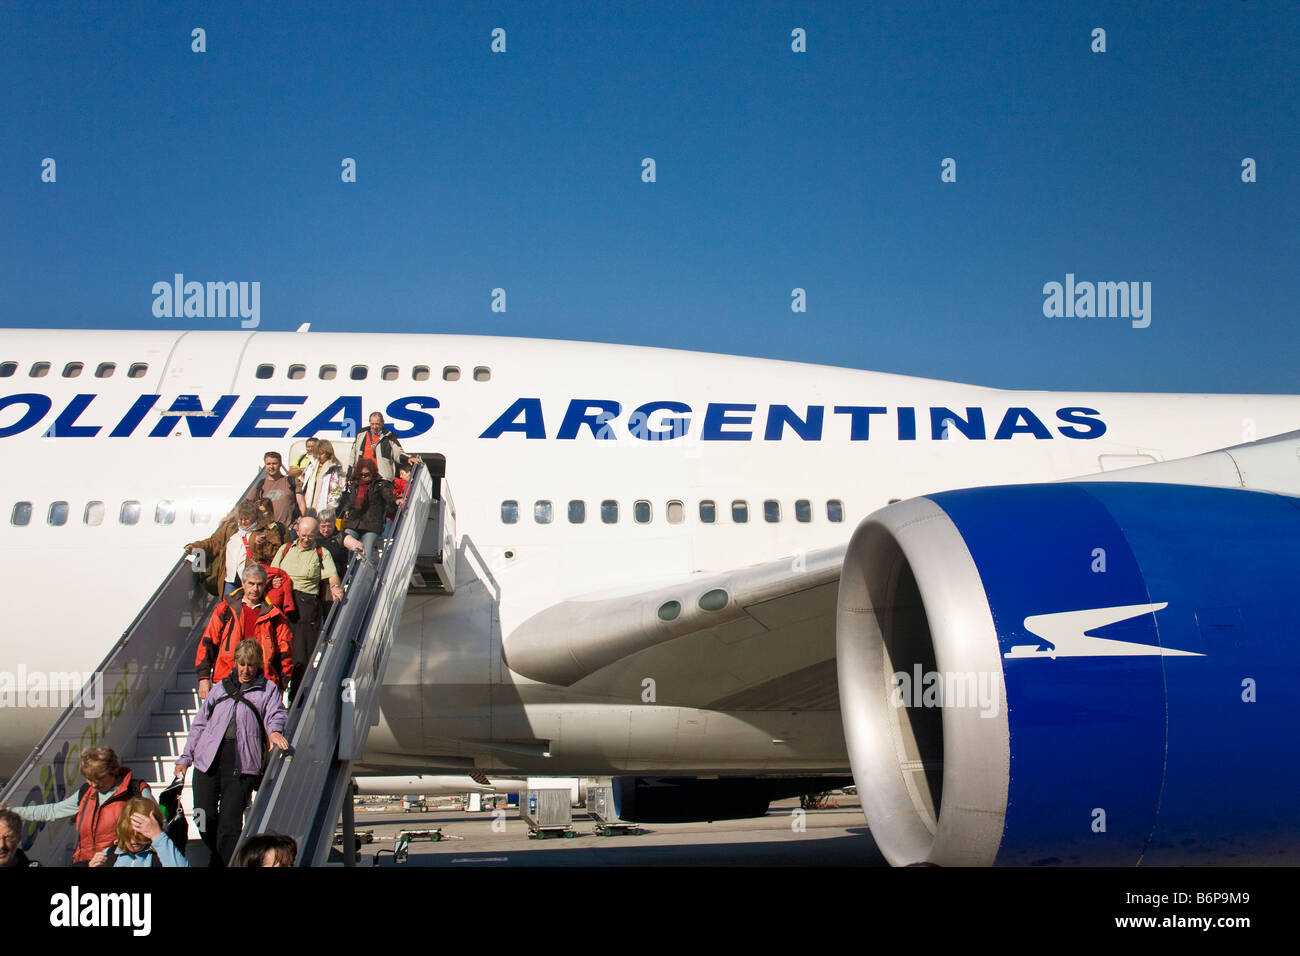 Passengers disembark an Aerolineas Argentinas Boeing 747 jumbo jet airplane aircraft in summer sunshine Buenos Aires Stock Photo